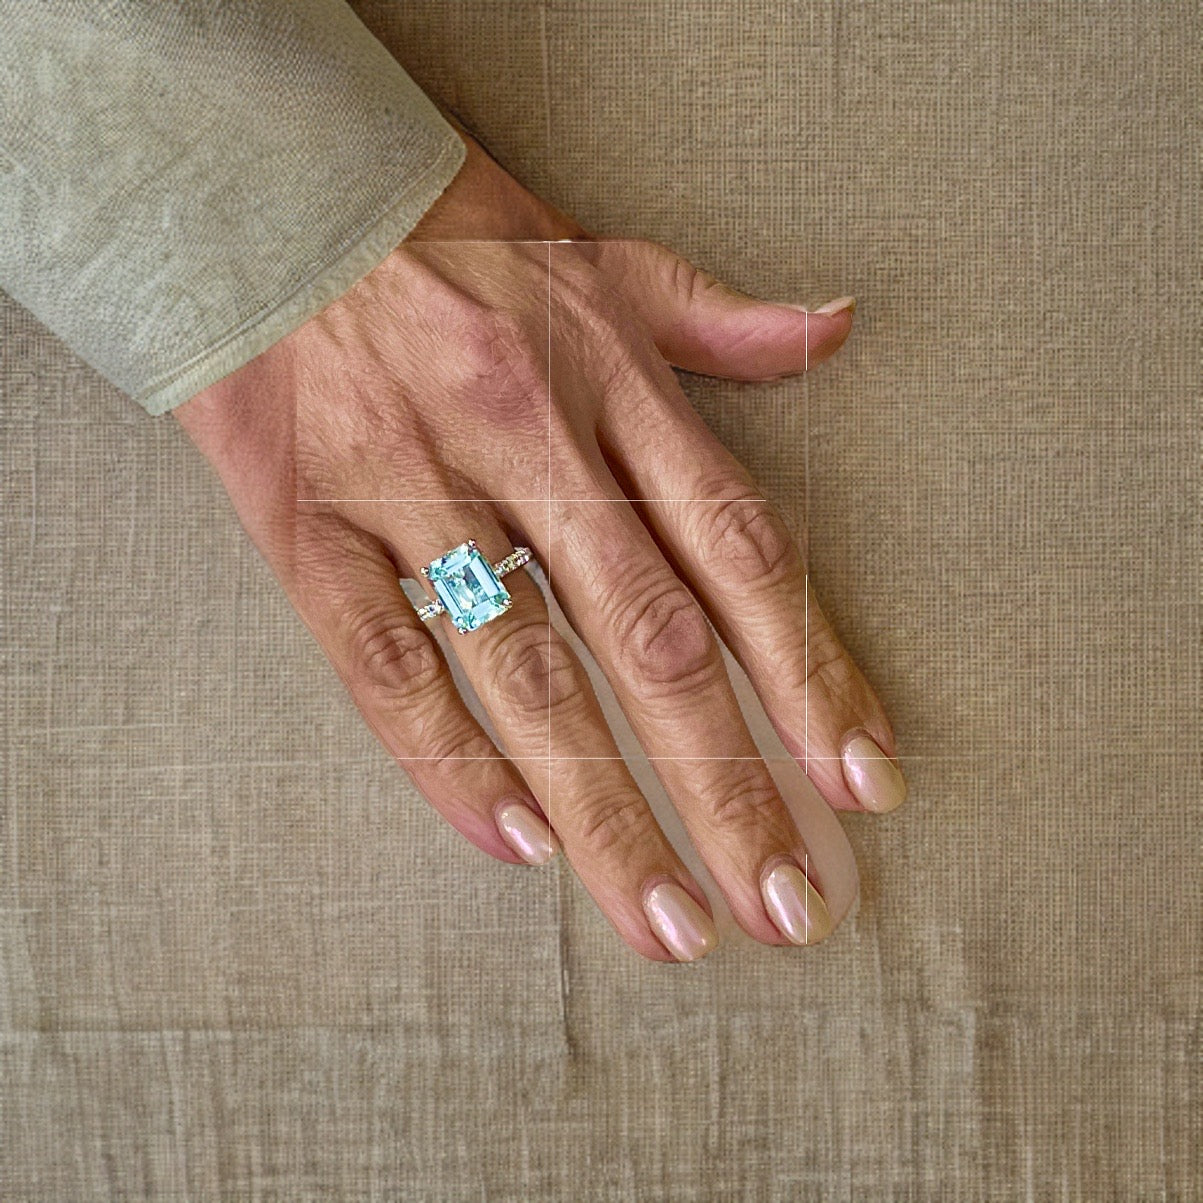 Natural Aquamarine Diamond Ring Size 6.5 14k W Gold 5.78 TCW Certified $4,950 217851 - Certified Fine Jewelry